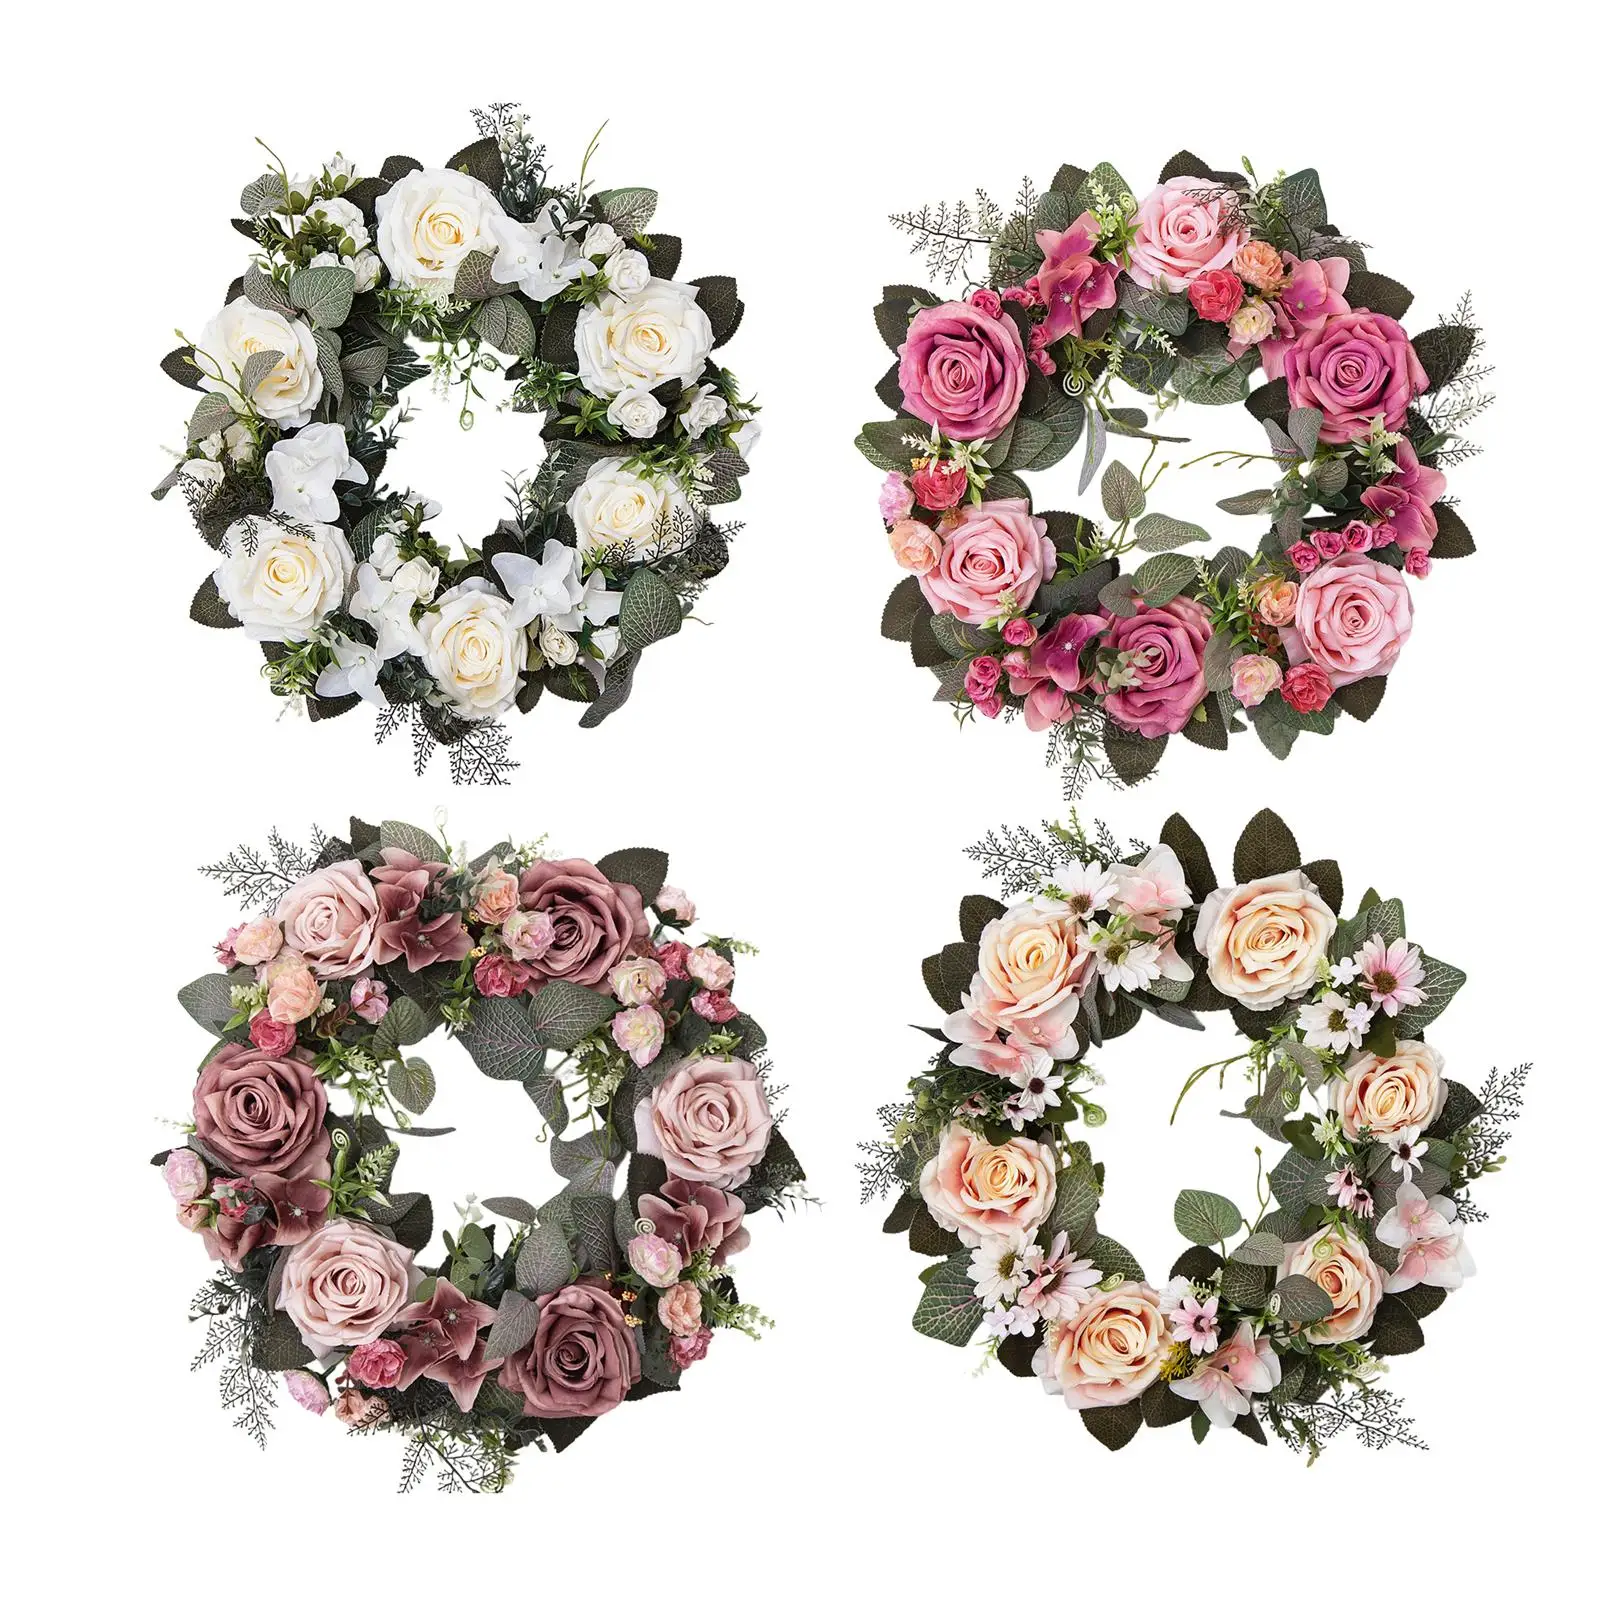 Artificial Wreath Flower Wreath Arrangements for Door Wall Wedding Decor Ornament